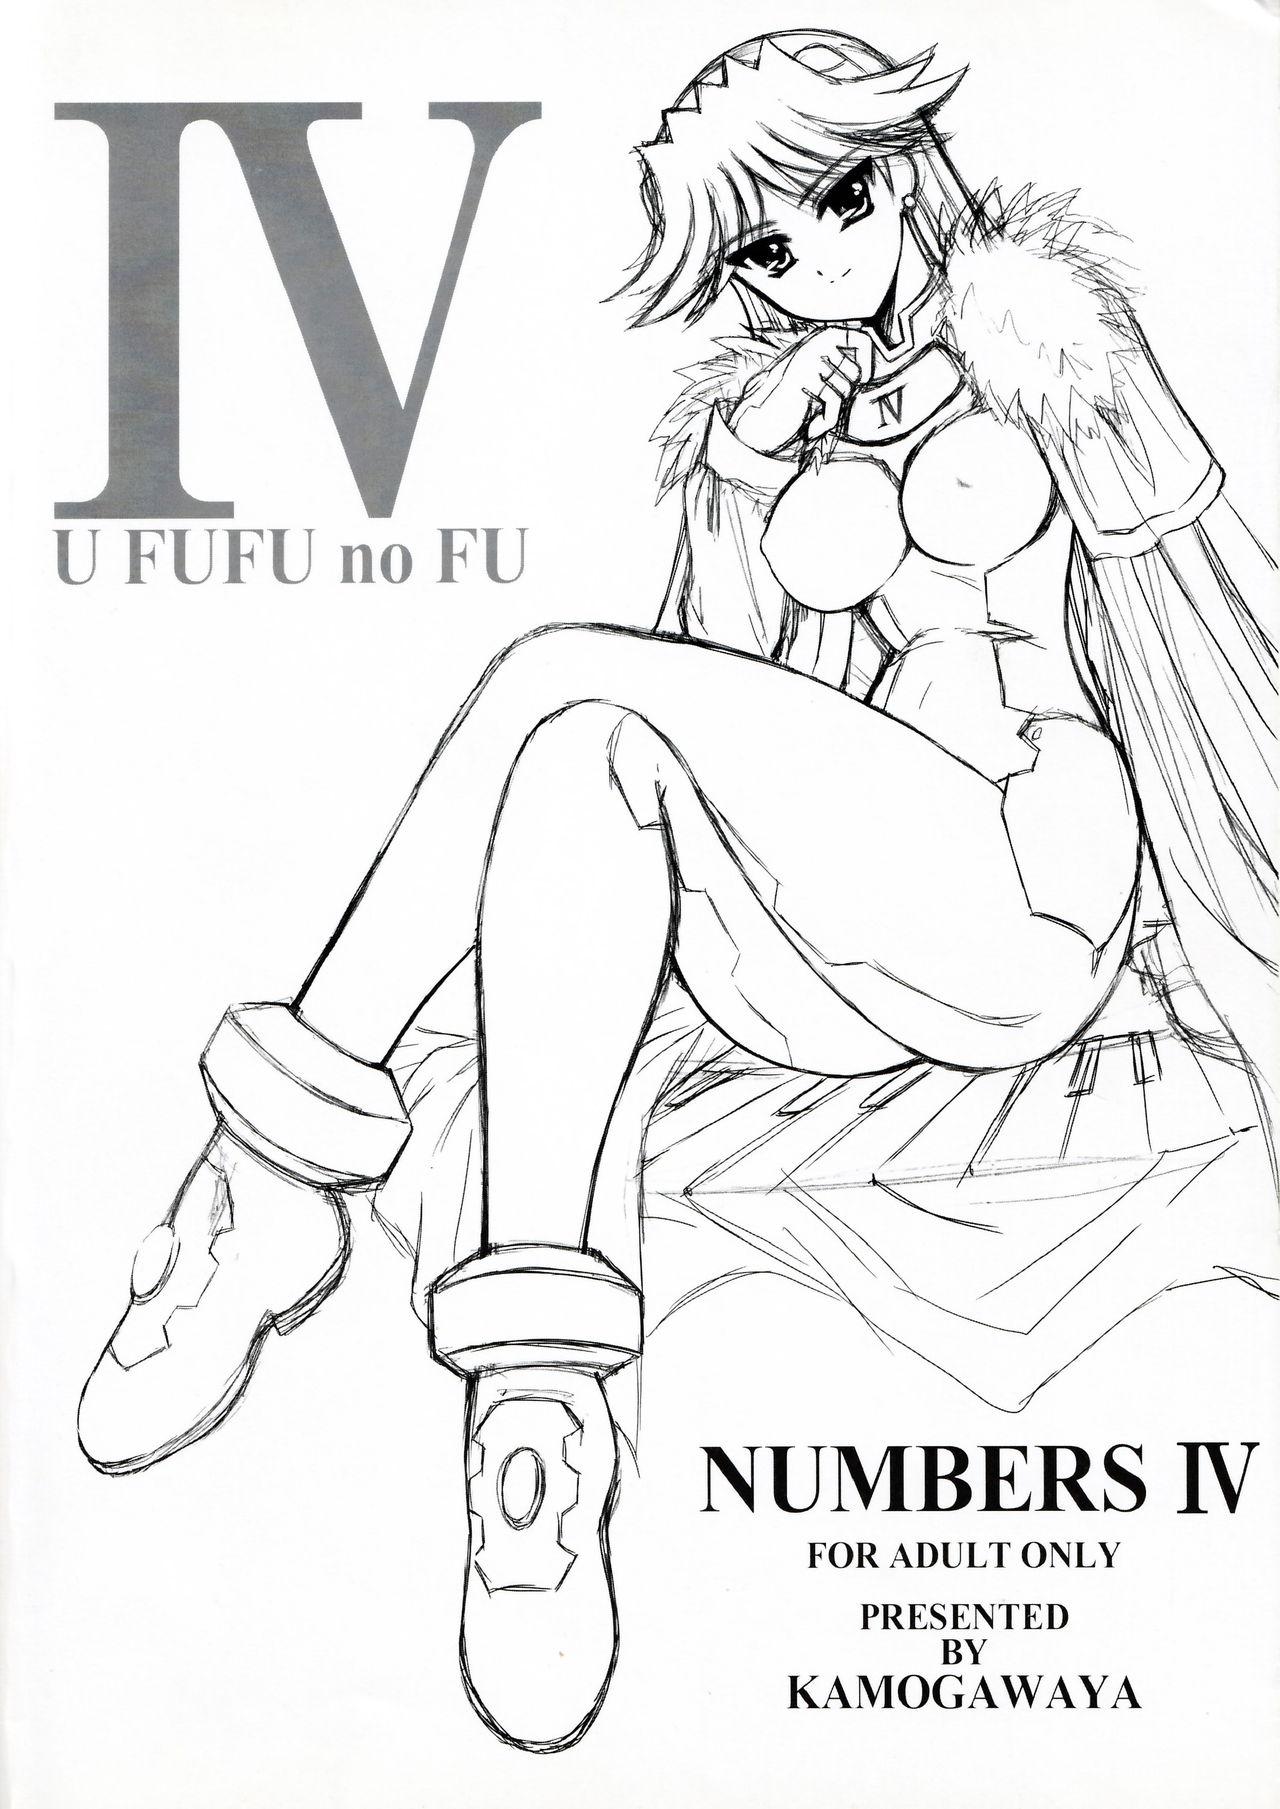 Ufufuu no Fu IV 20